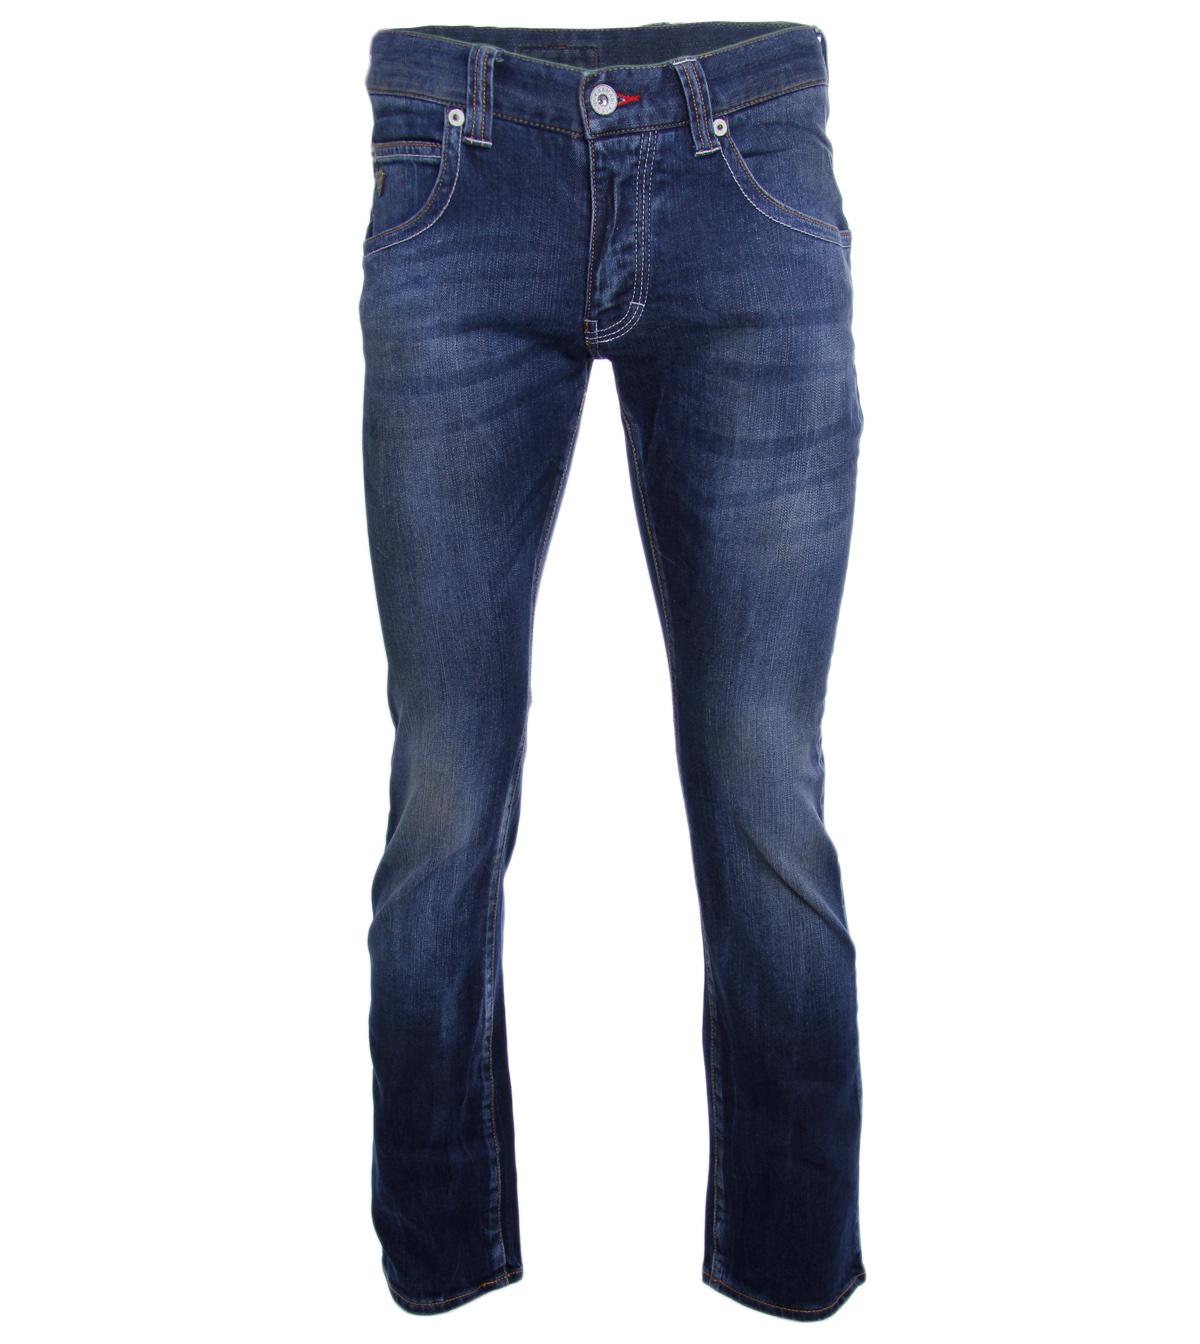 Foto Armani Jeans Blue Heavily Washed/Faded Denim Jeans foto 61337